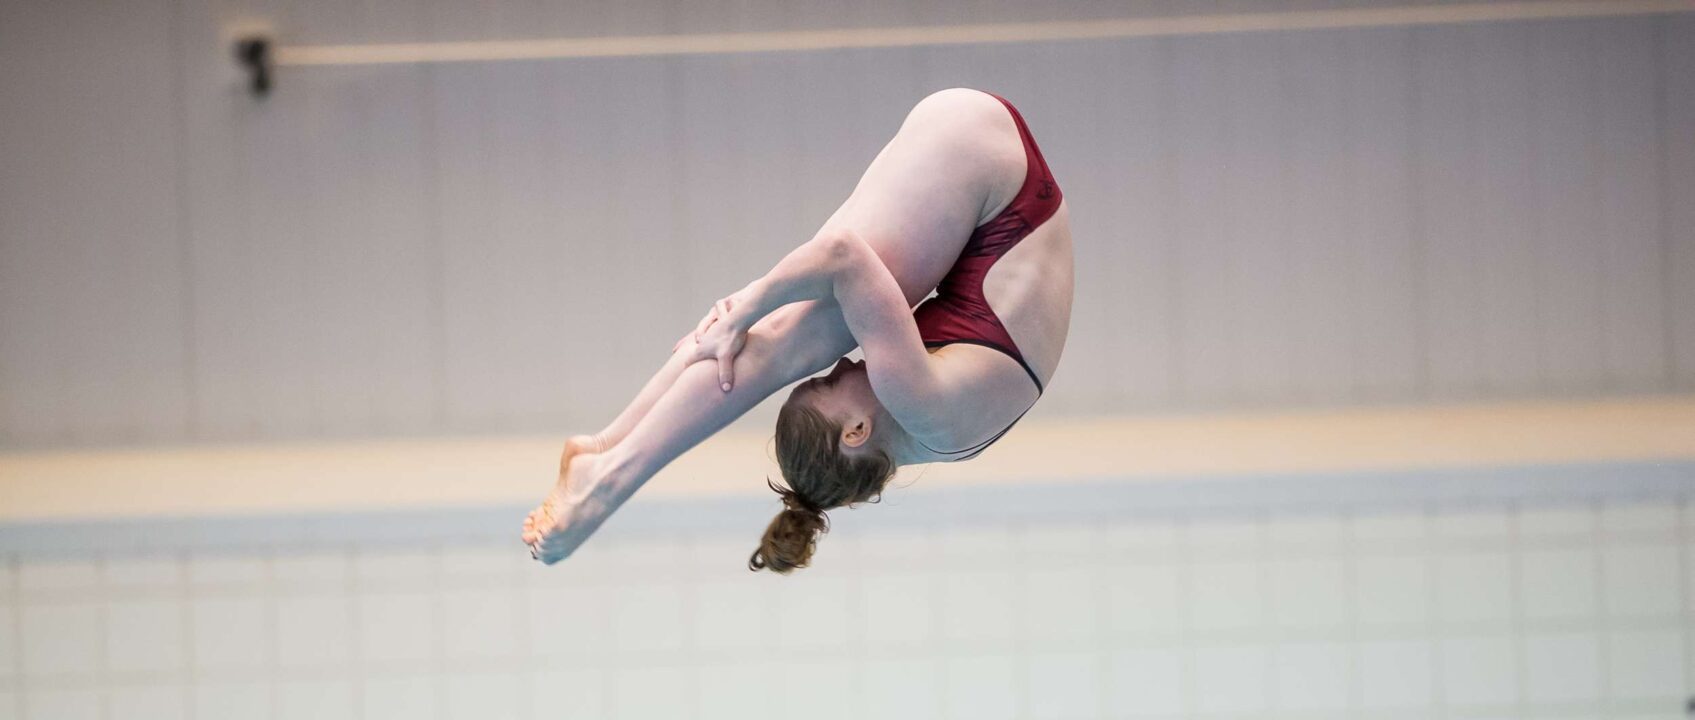 South Carolina’s Brooke Schultz Earns Bronze At FINA Diving World Cup